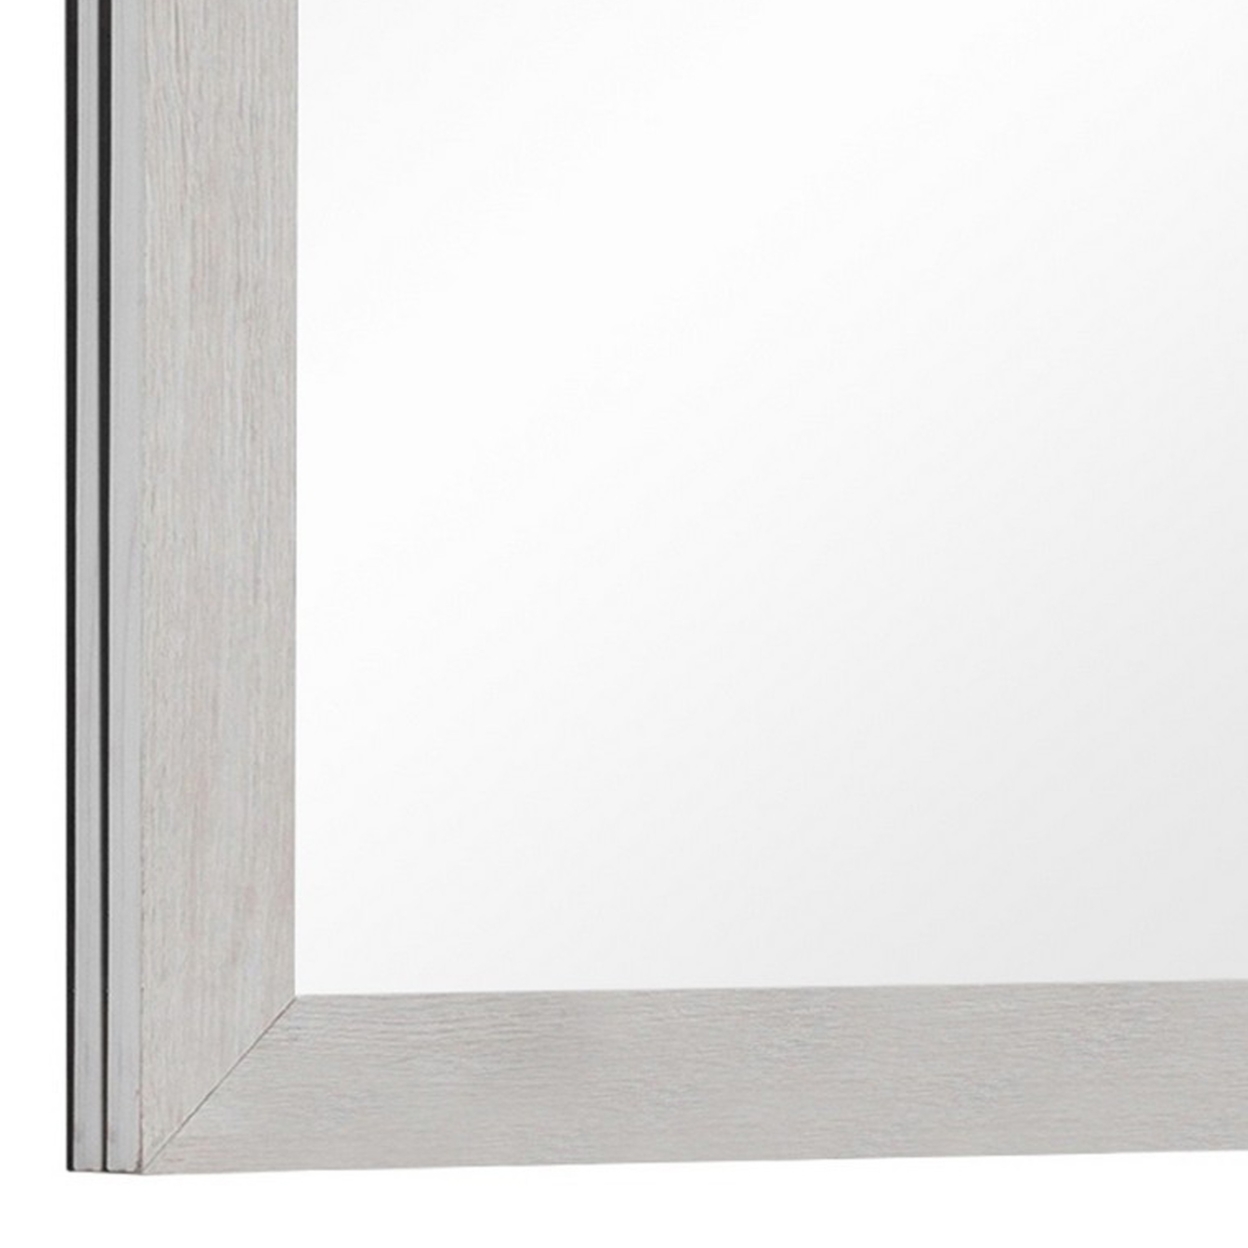 Mirror With Wooden Frame And Grain Details, White- Saltoro Sherpi